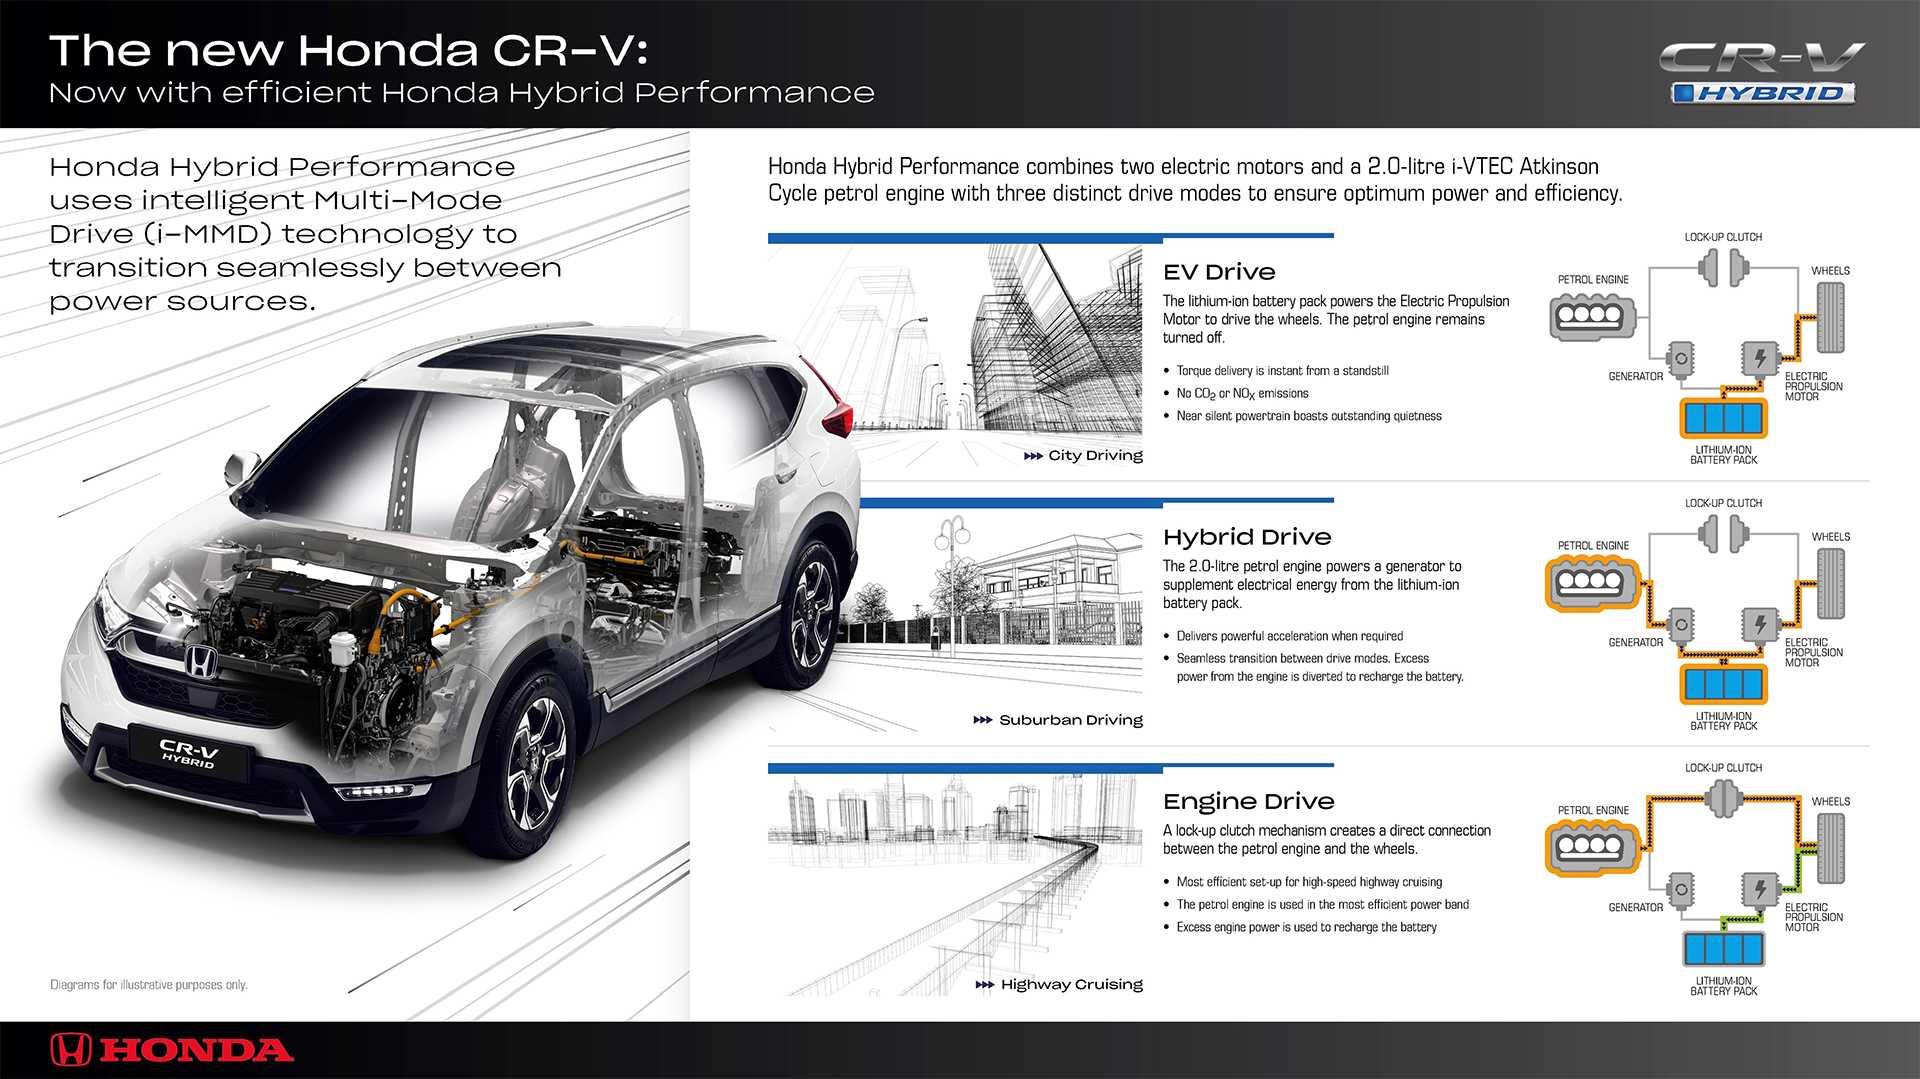 Introducing the New Honda CR-V hybrid